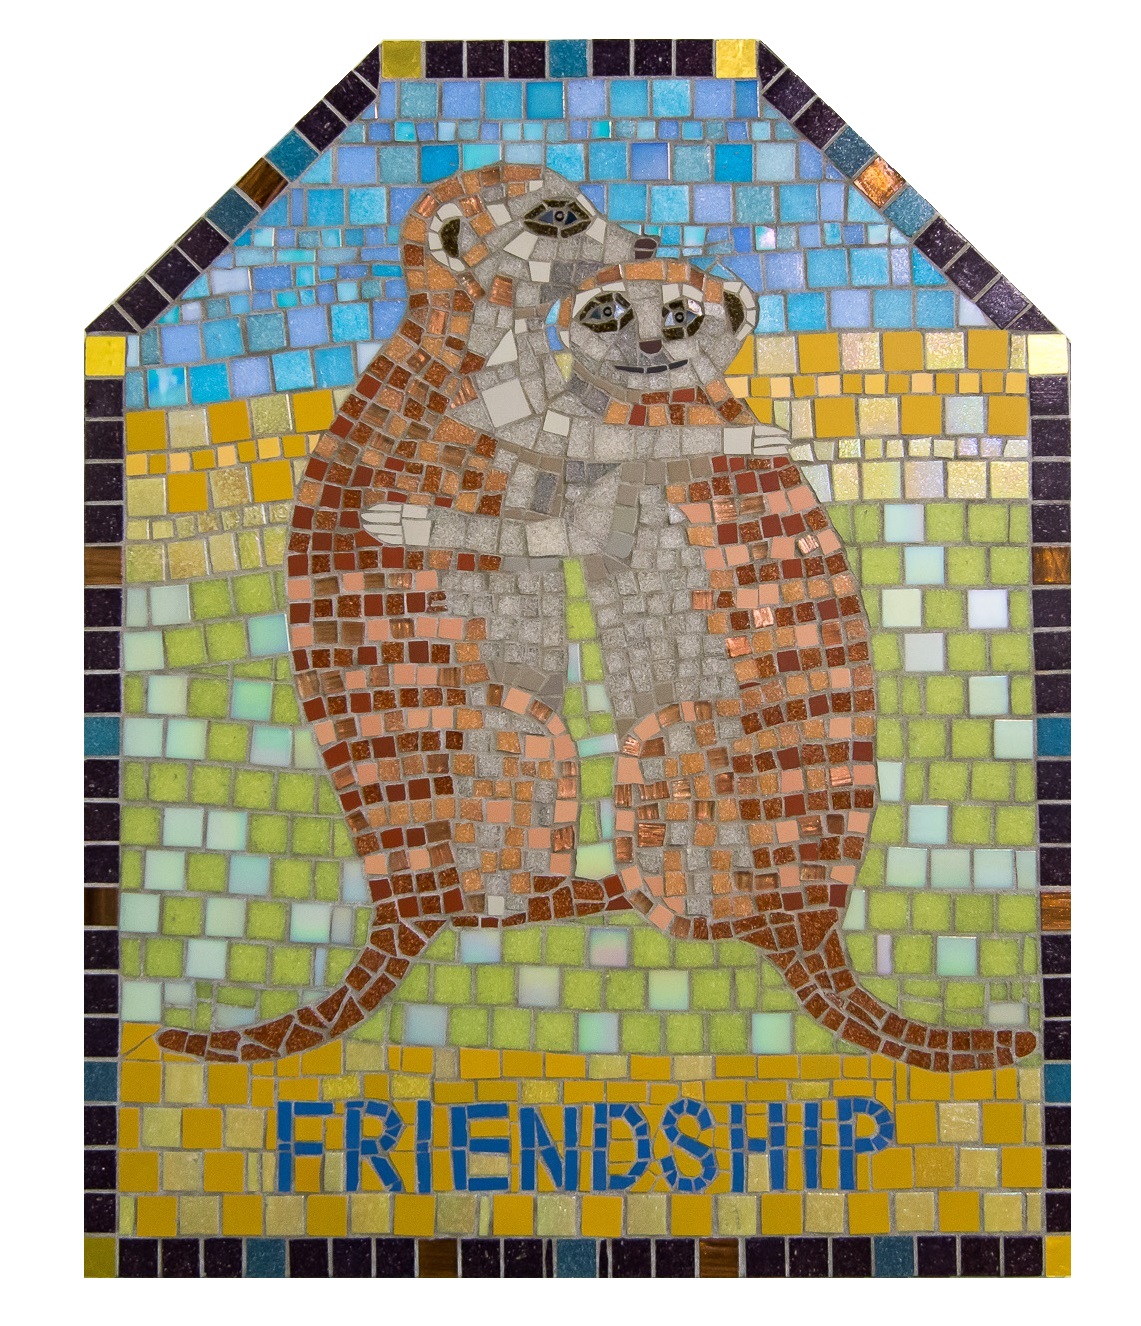 Friendship mosaic